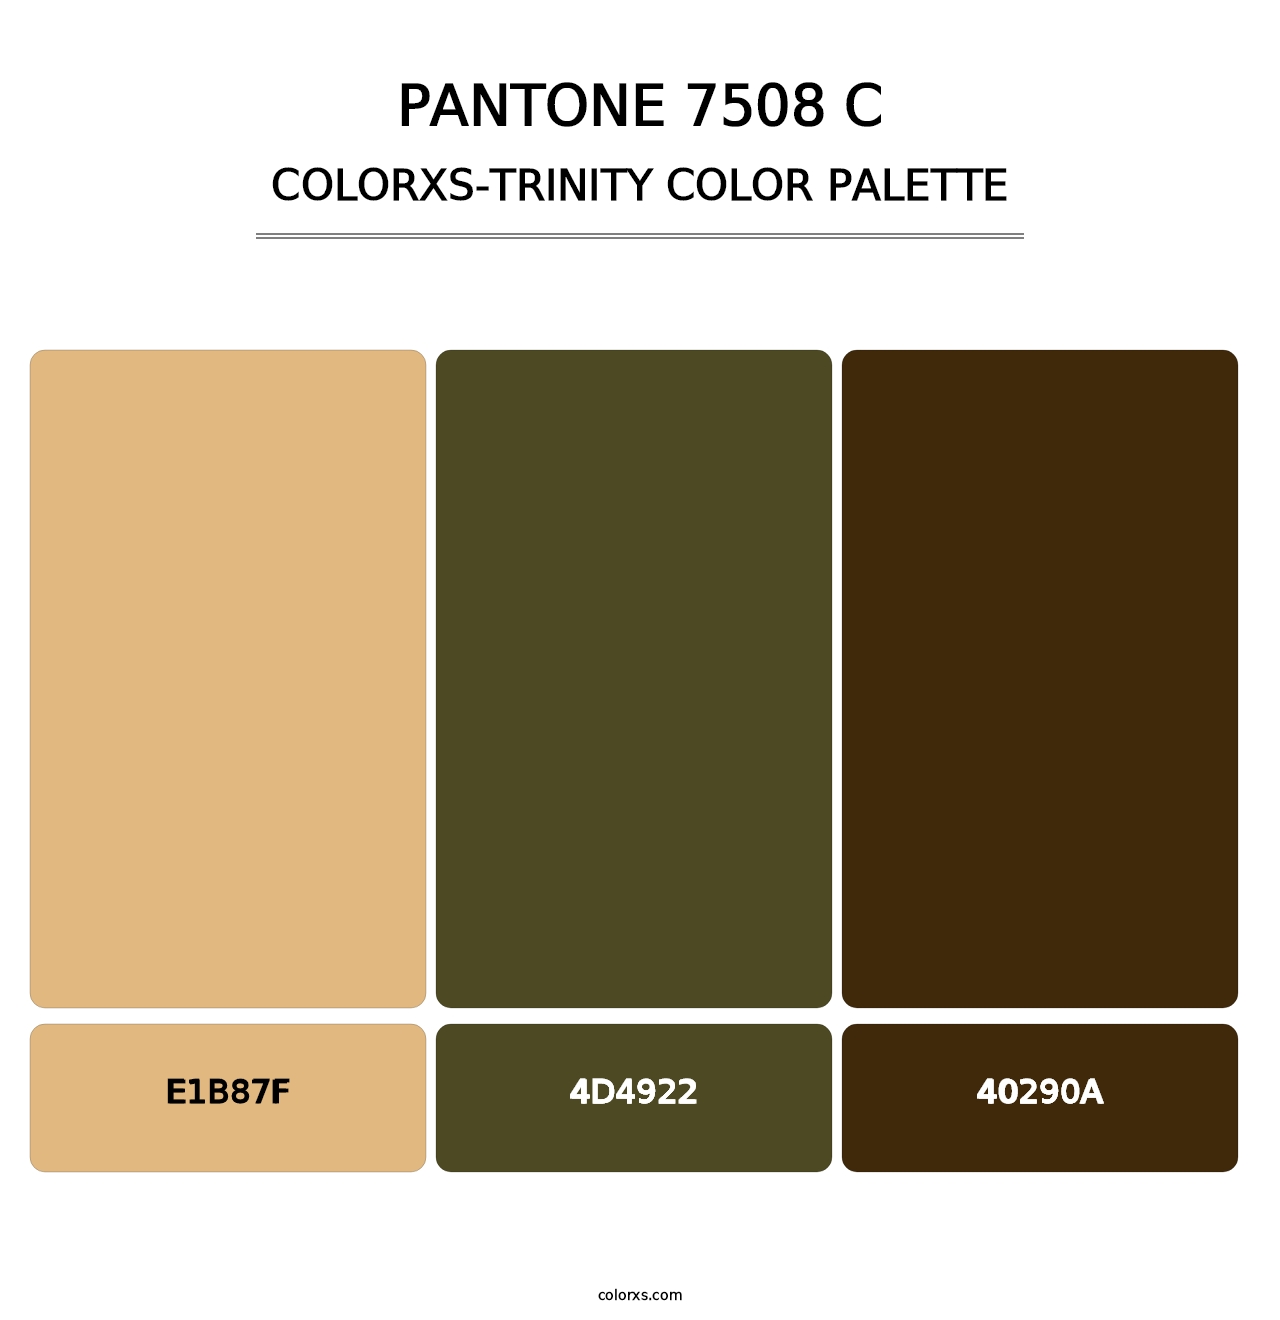 PANTONE 7508 C - Colorxs Trinity Palette